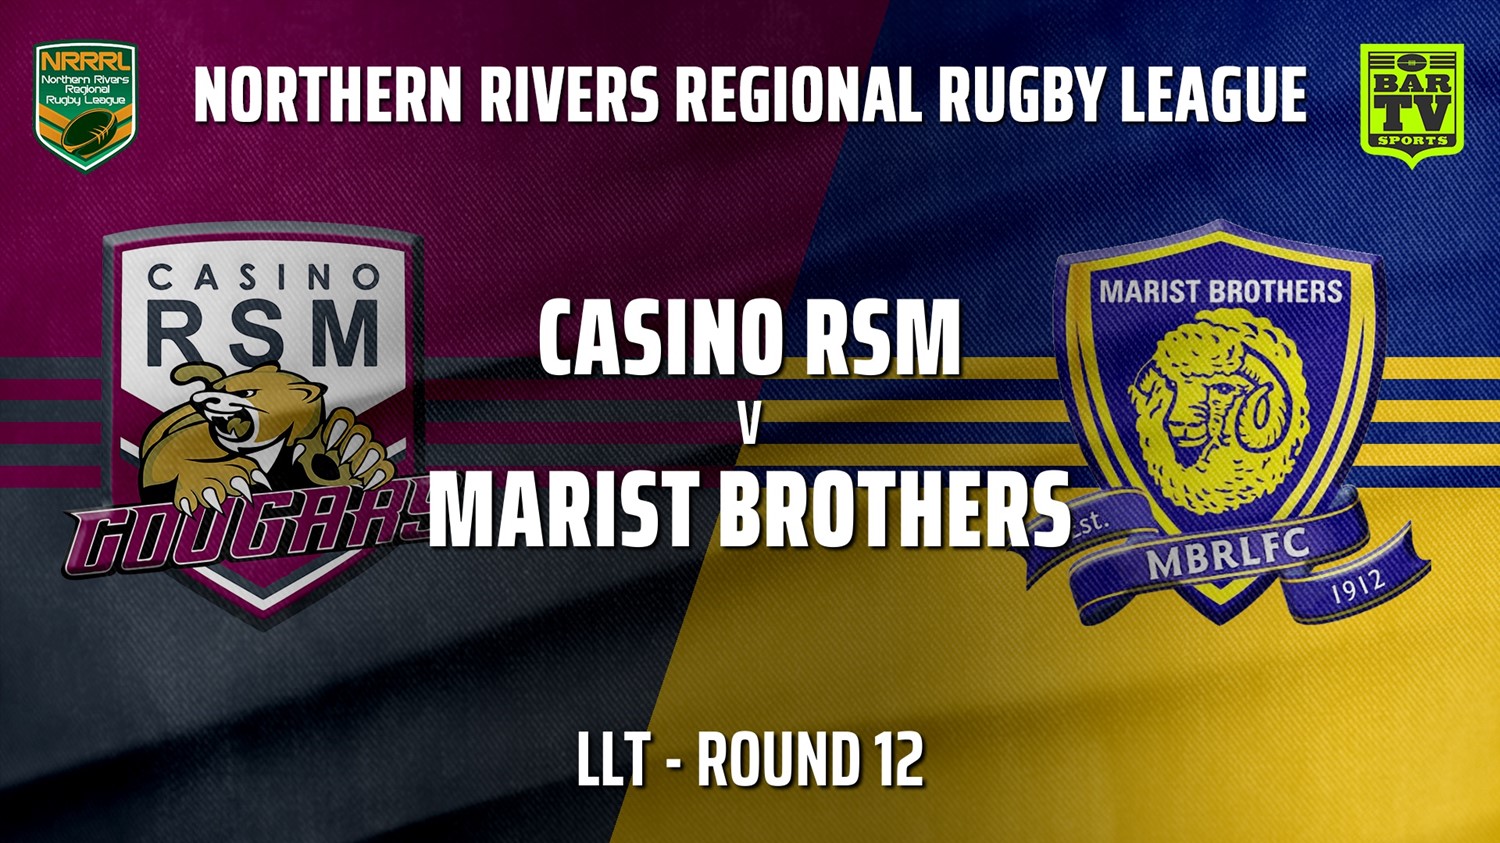 210725-Northern Rivers Round 12 - LLT - Casino RSM Cougars v Lismore Marist Brothers Rams Slate Image